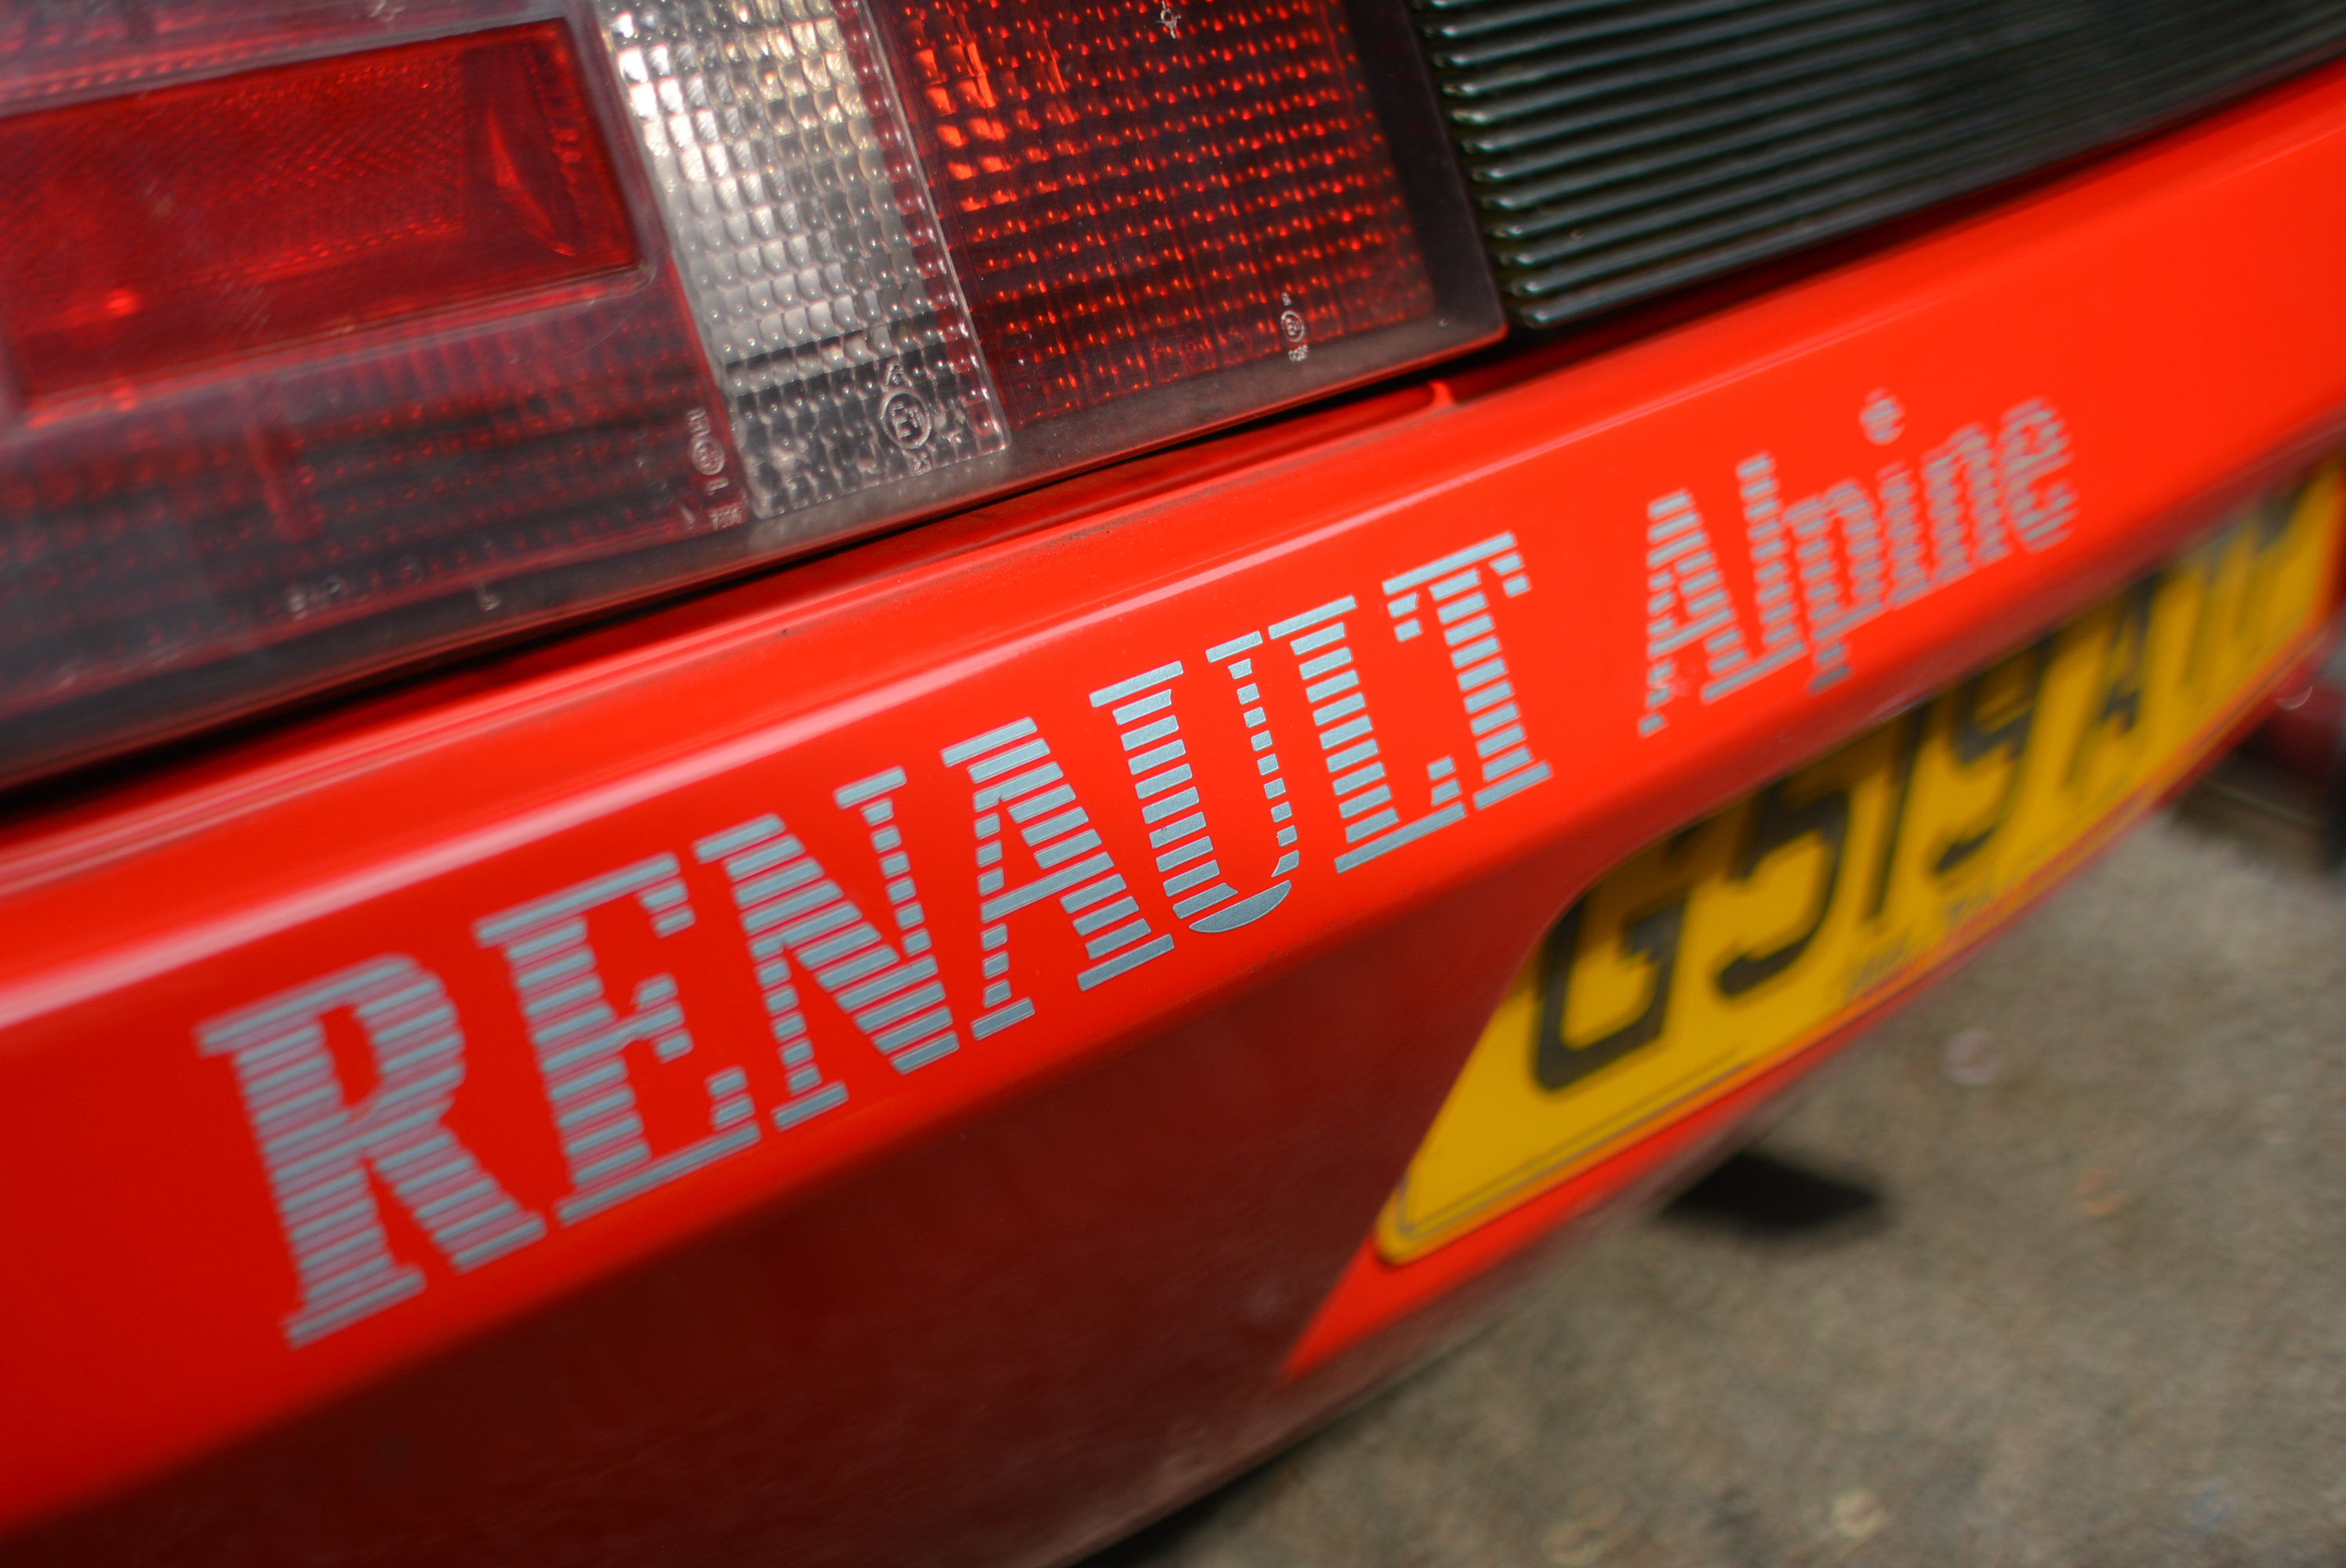 Renault Alpine GTA V6 Turbo